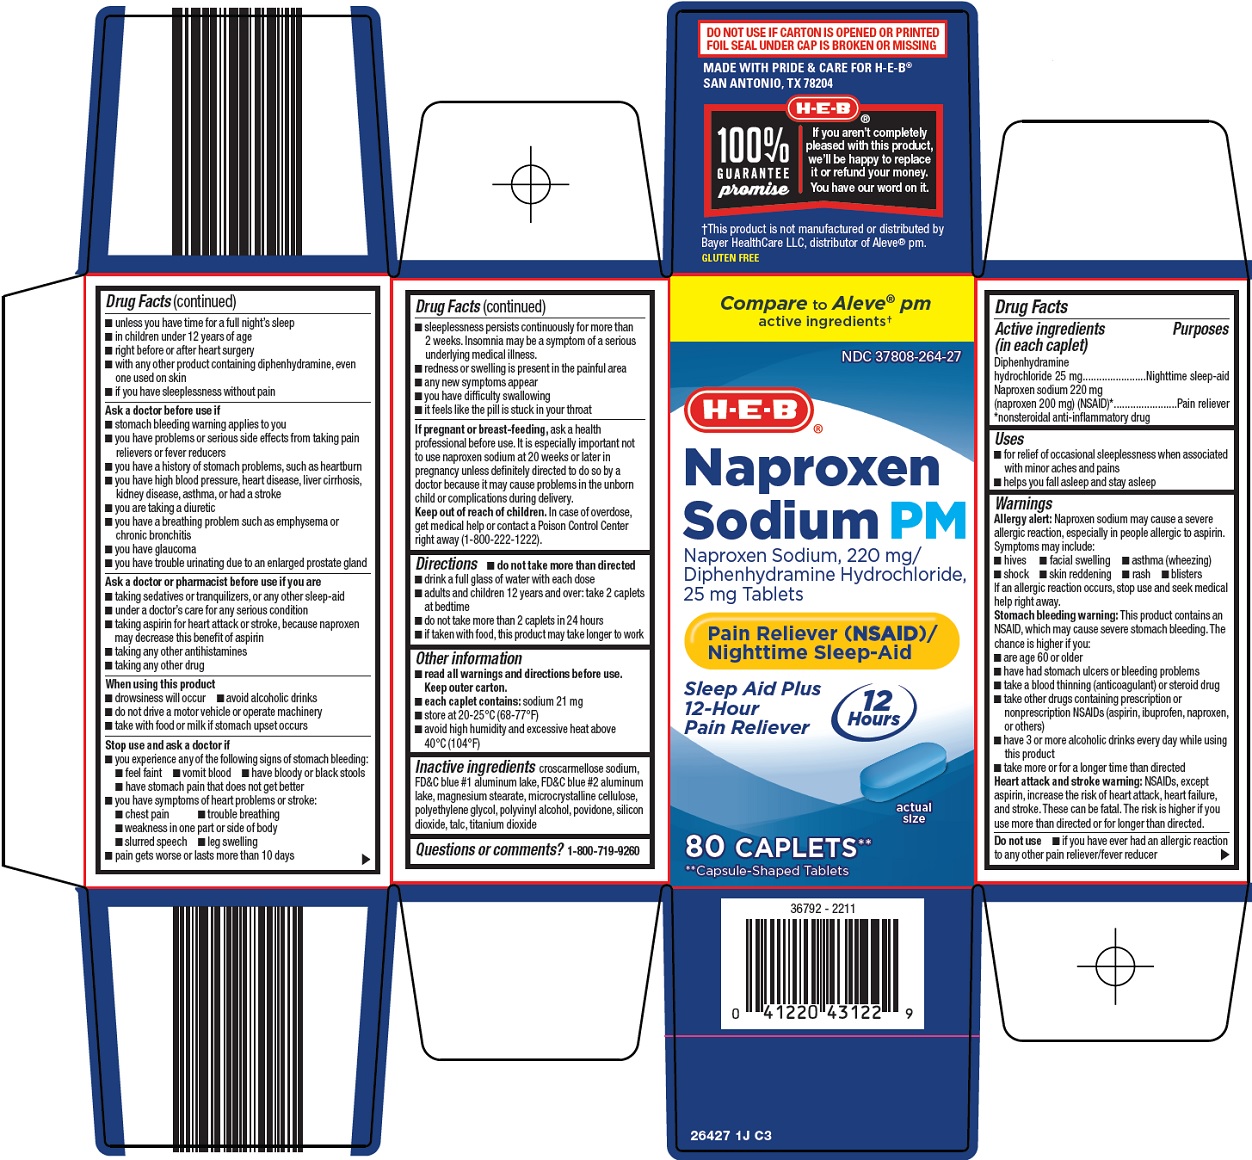 Naproxen Sodium PM Carton